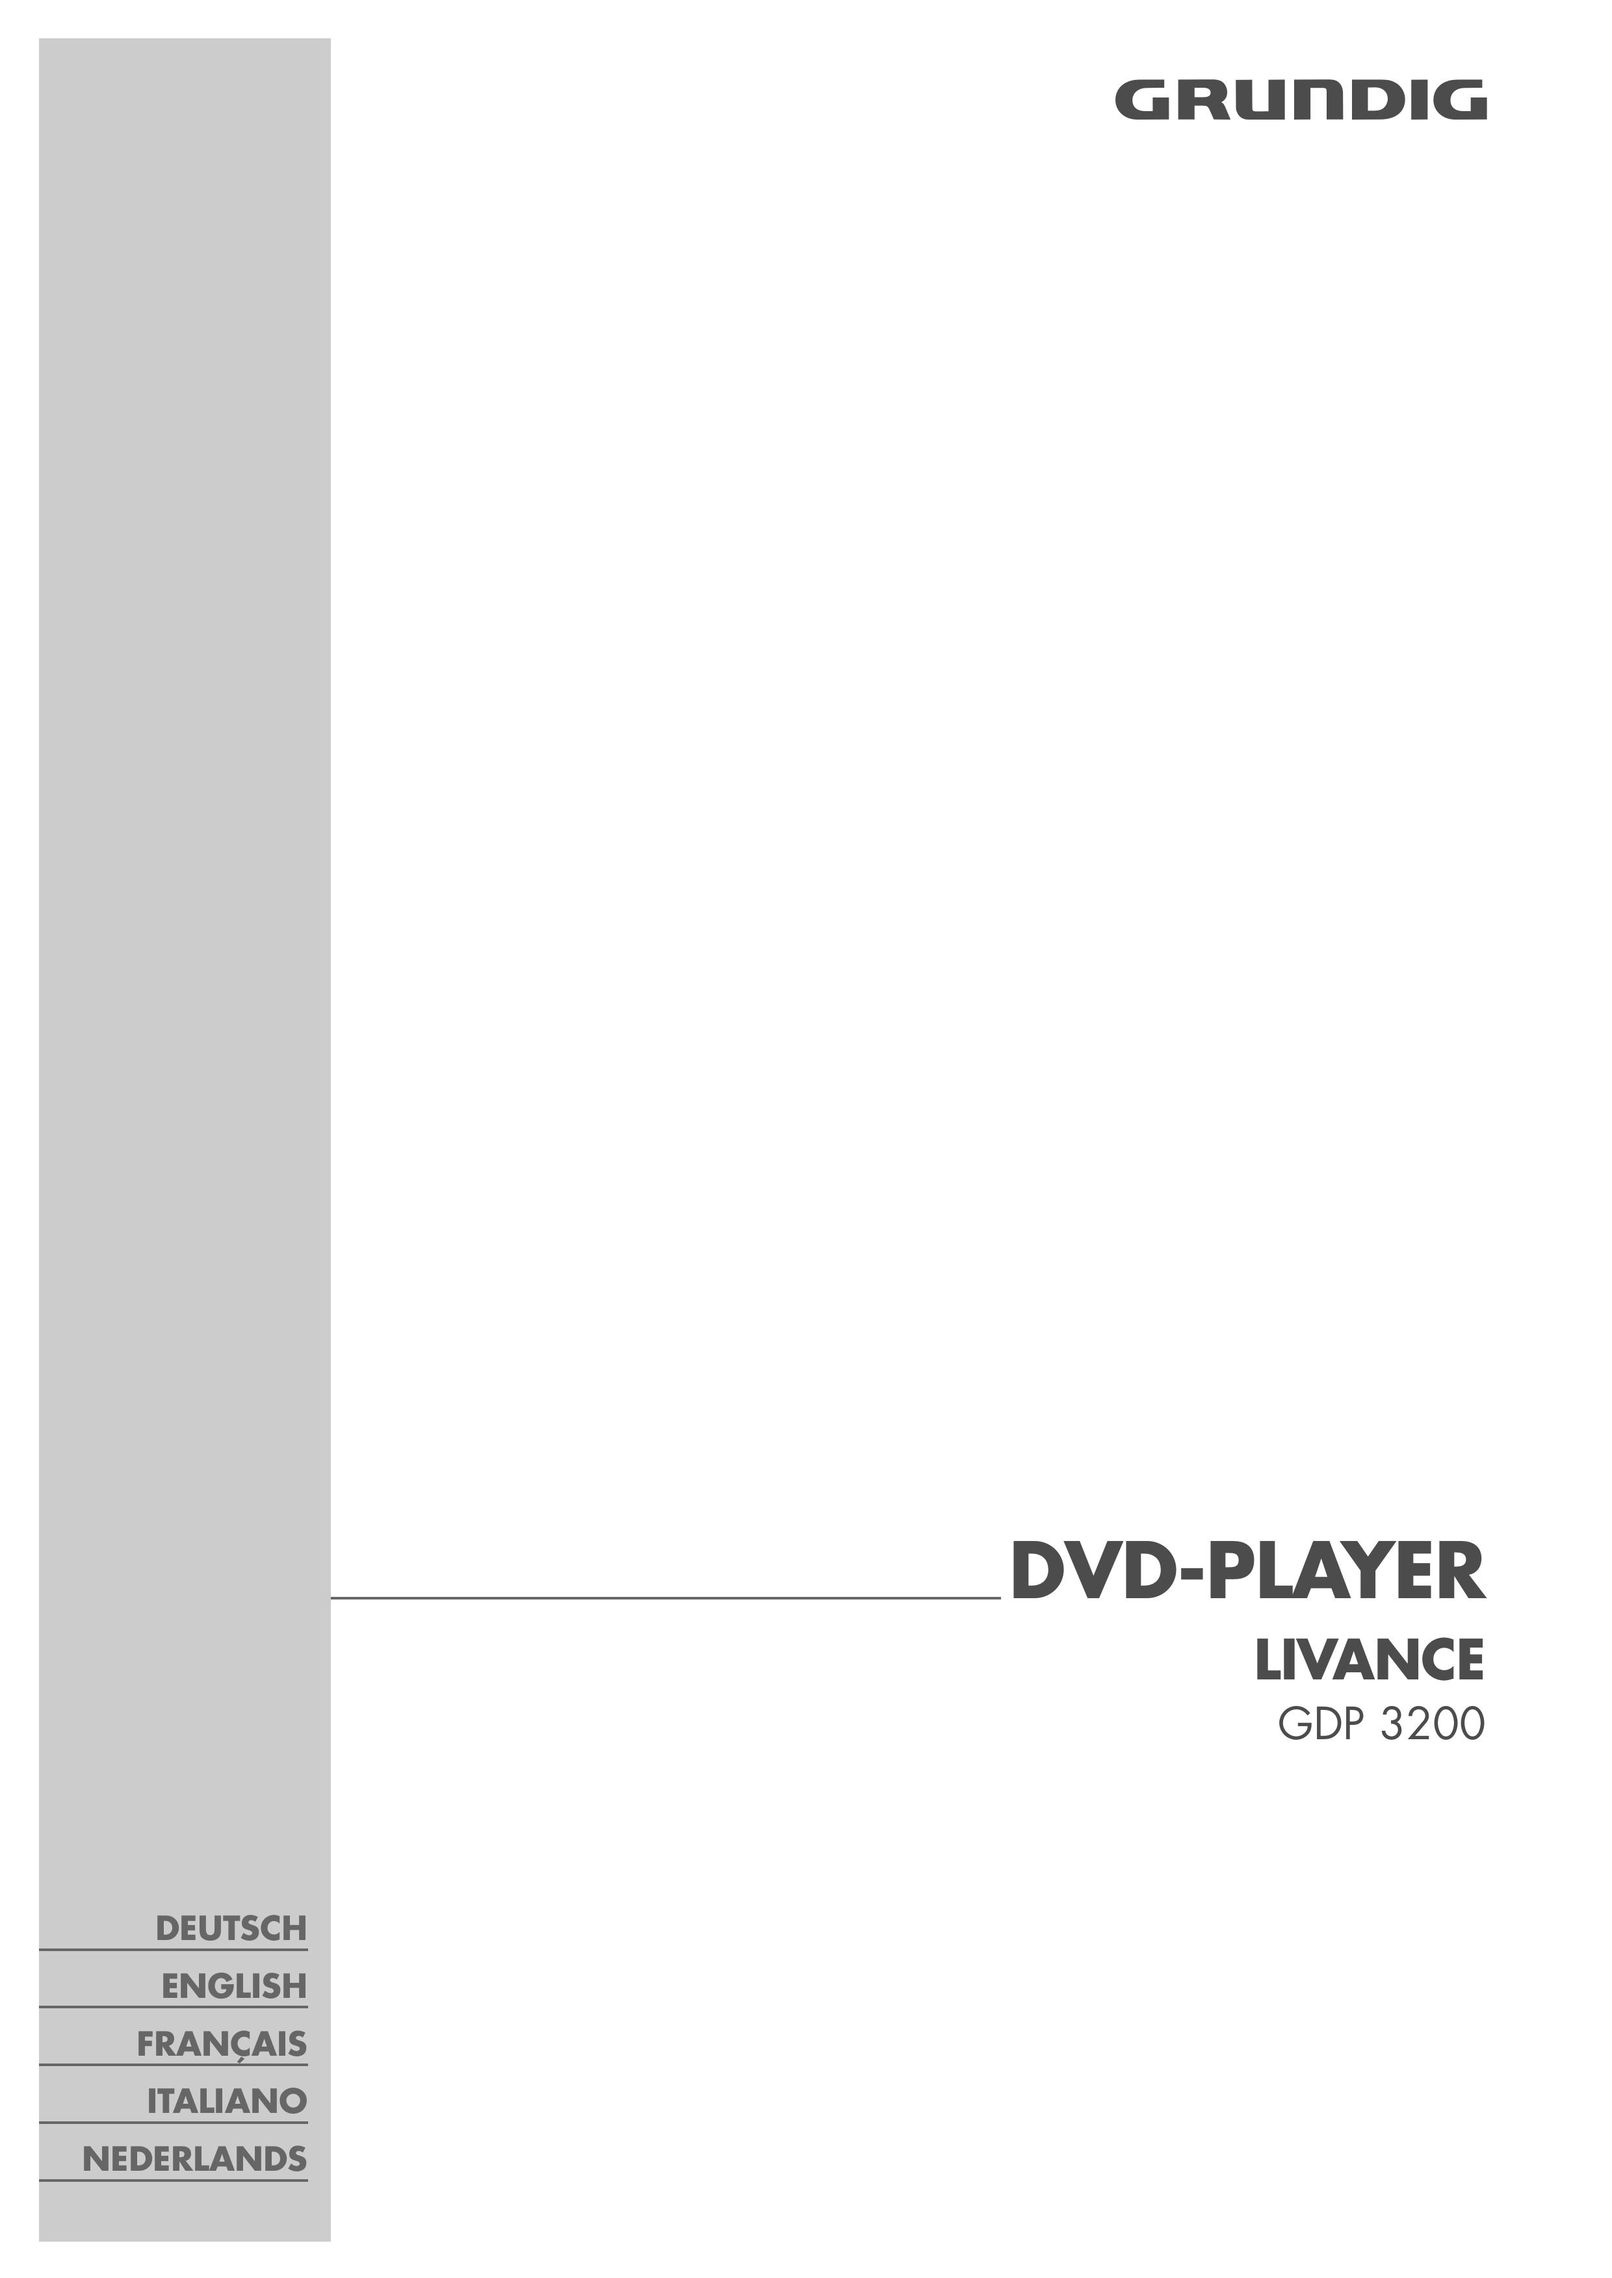 Grundig GDP 3200 DVD Player User Manual